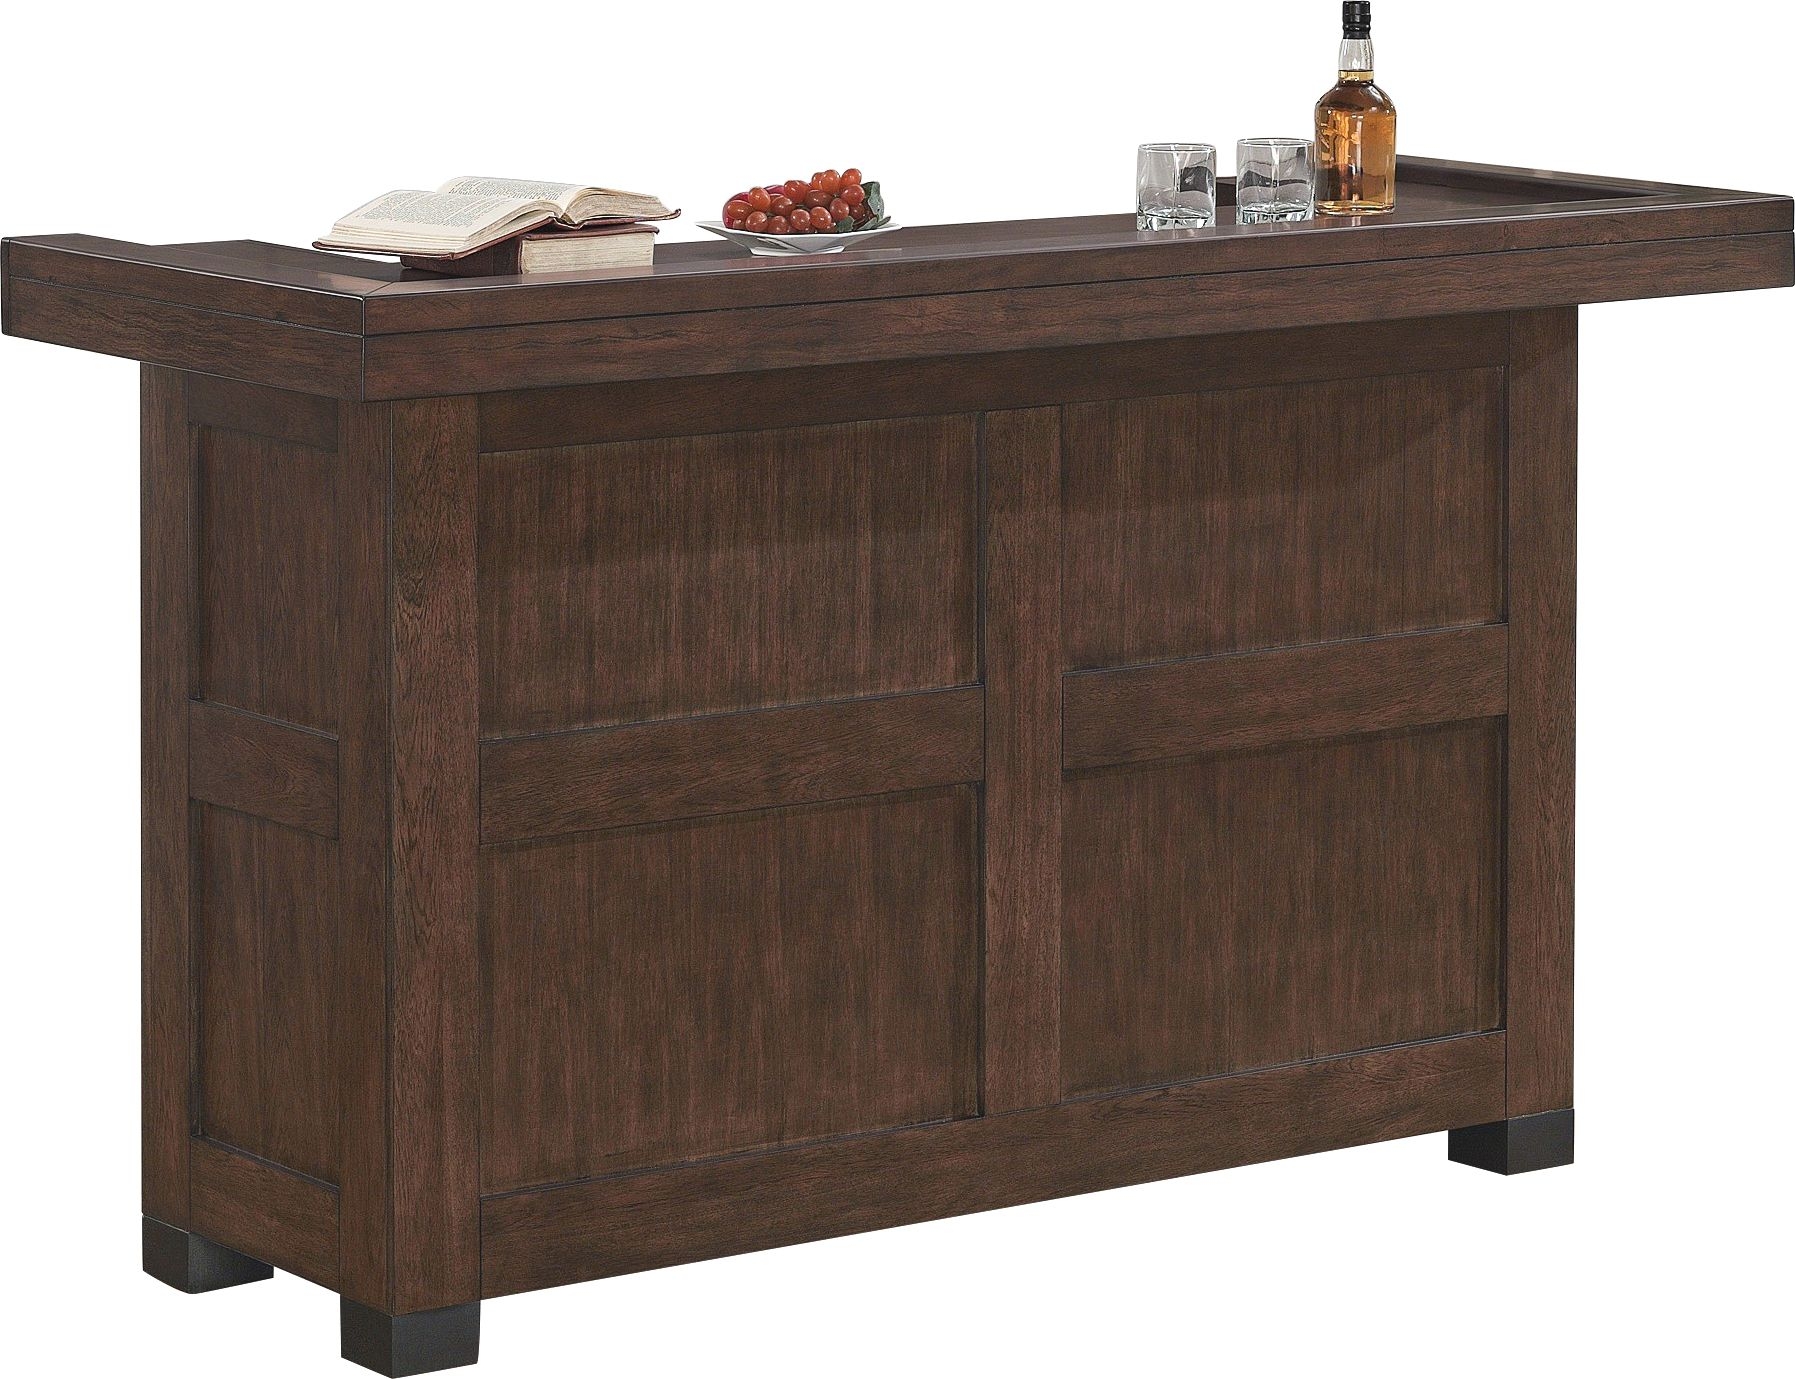 Verano Old World Sable Wood Transitional Bar Cabinet - Image 0